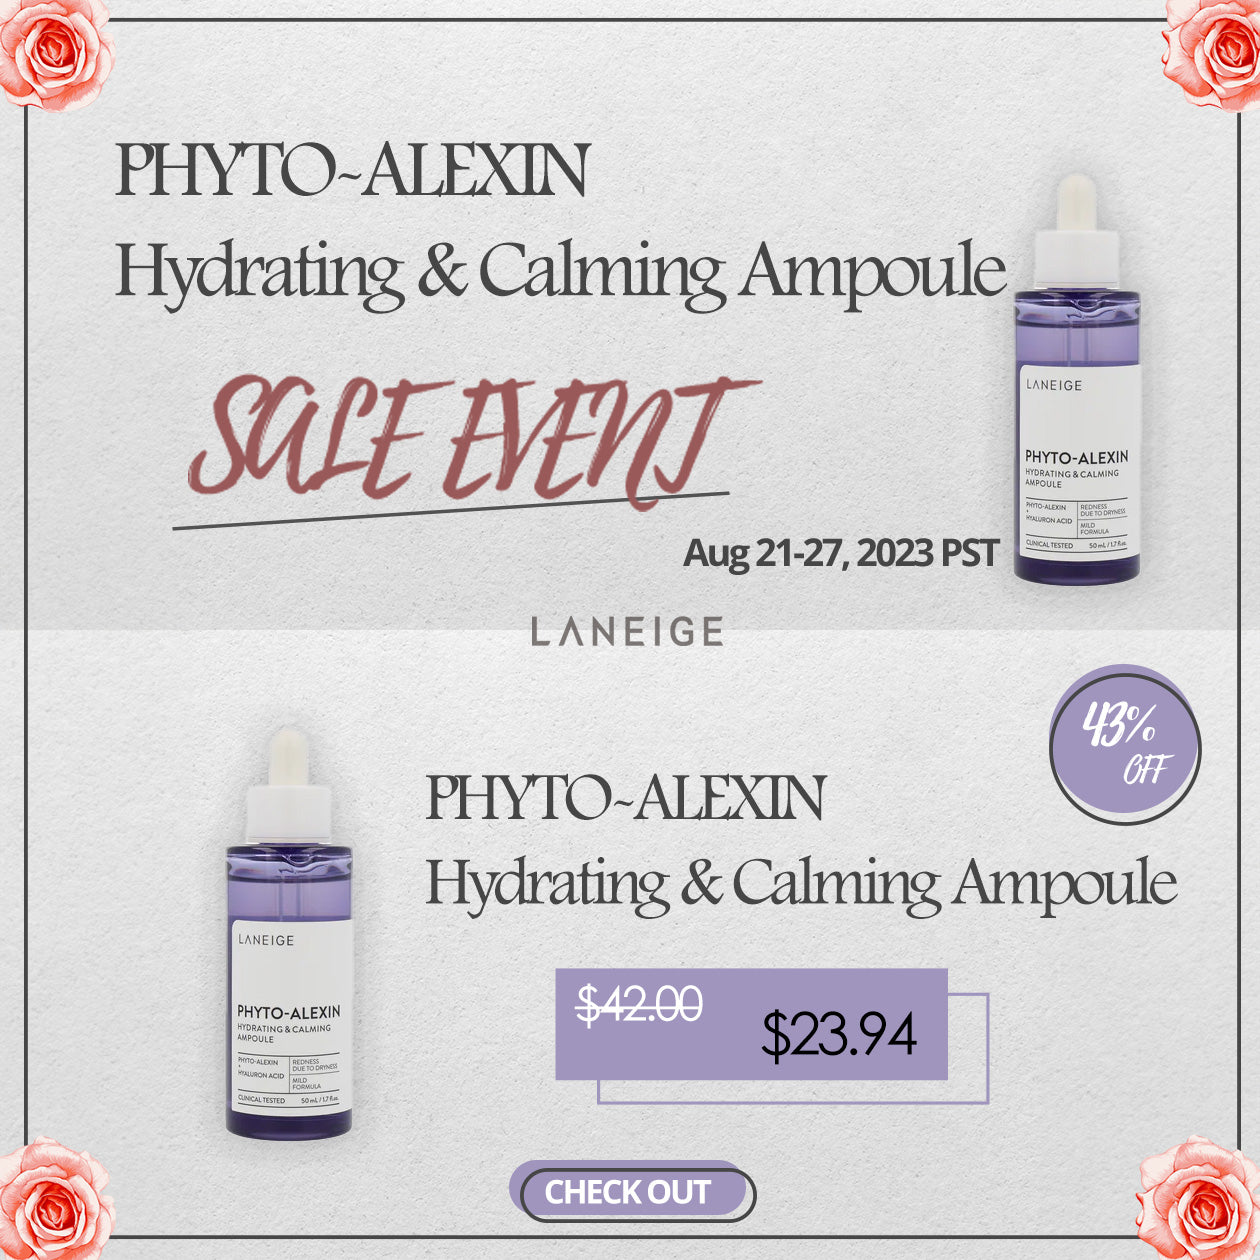 phyto-alexin ampoule 43persent sale detail